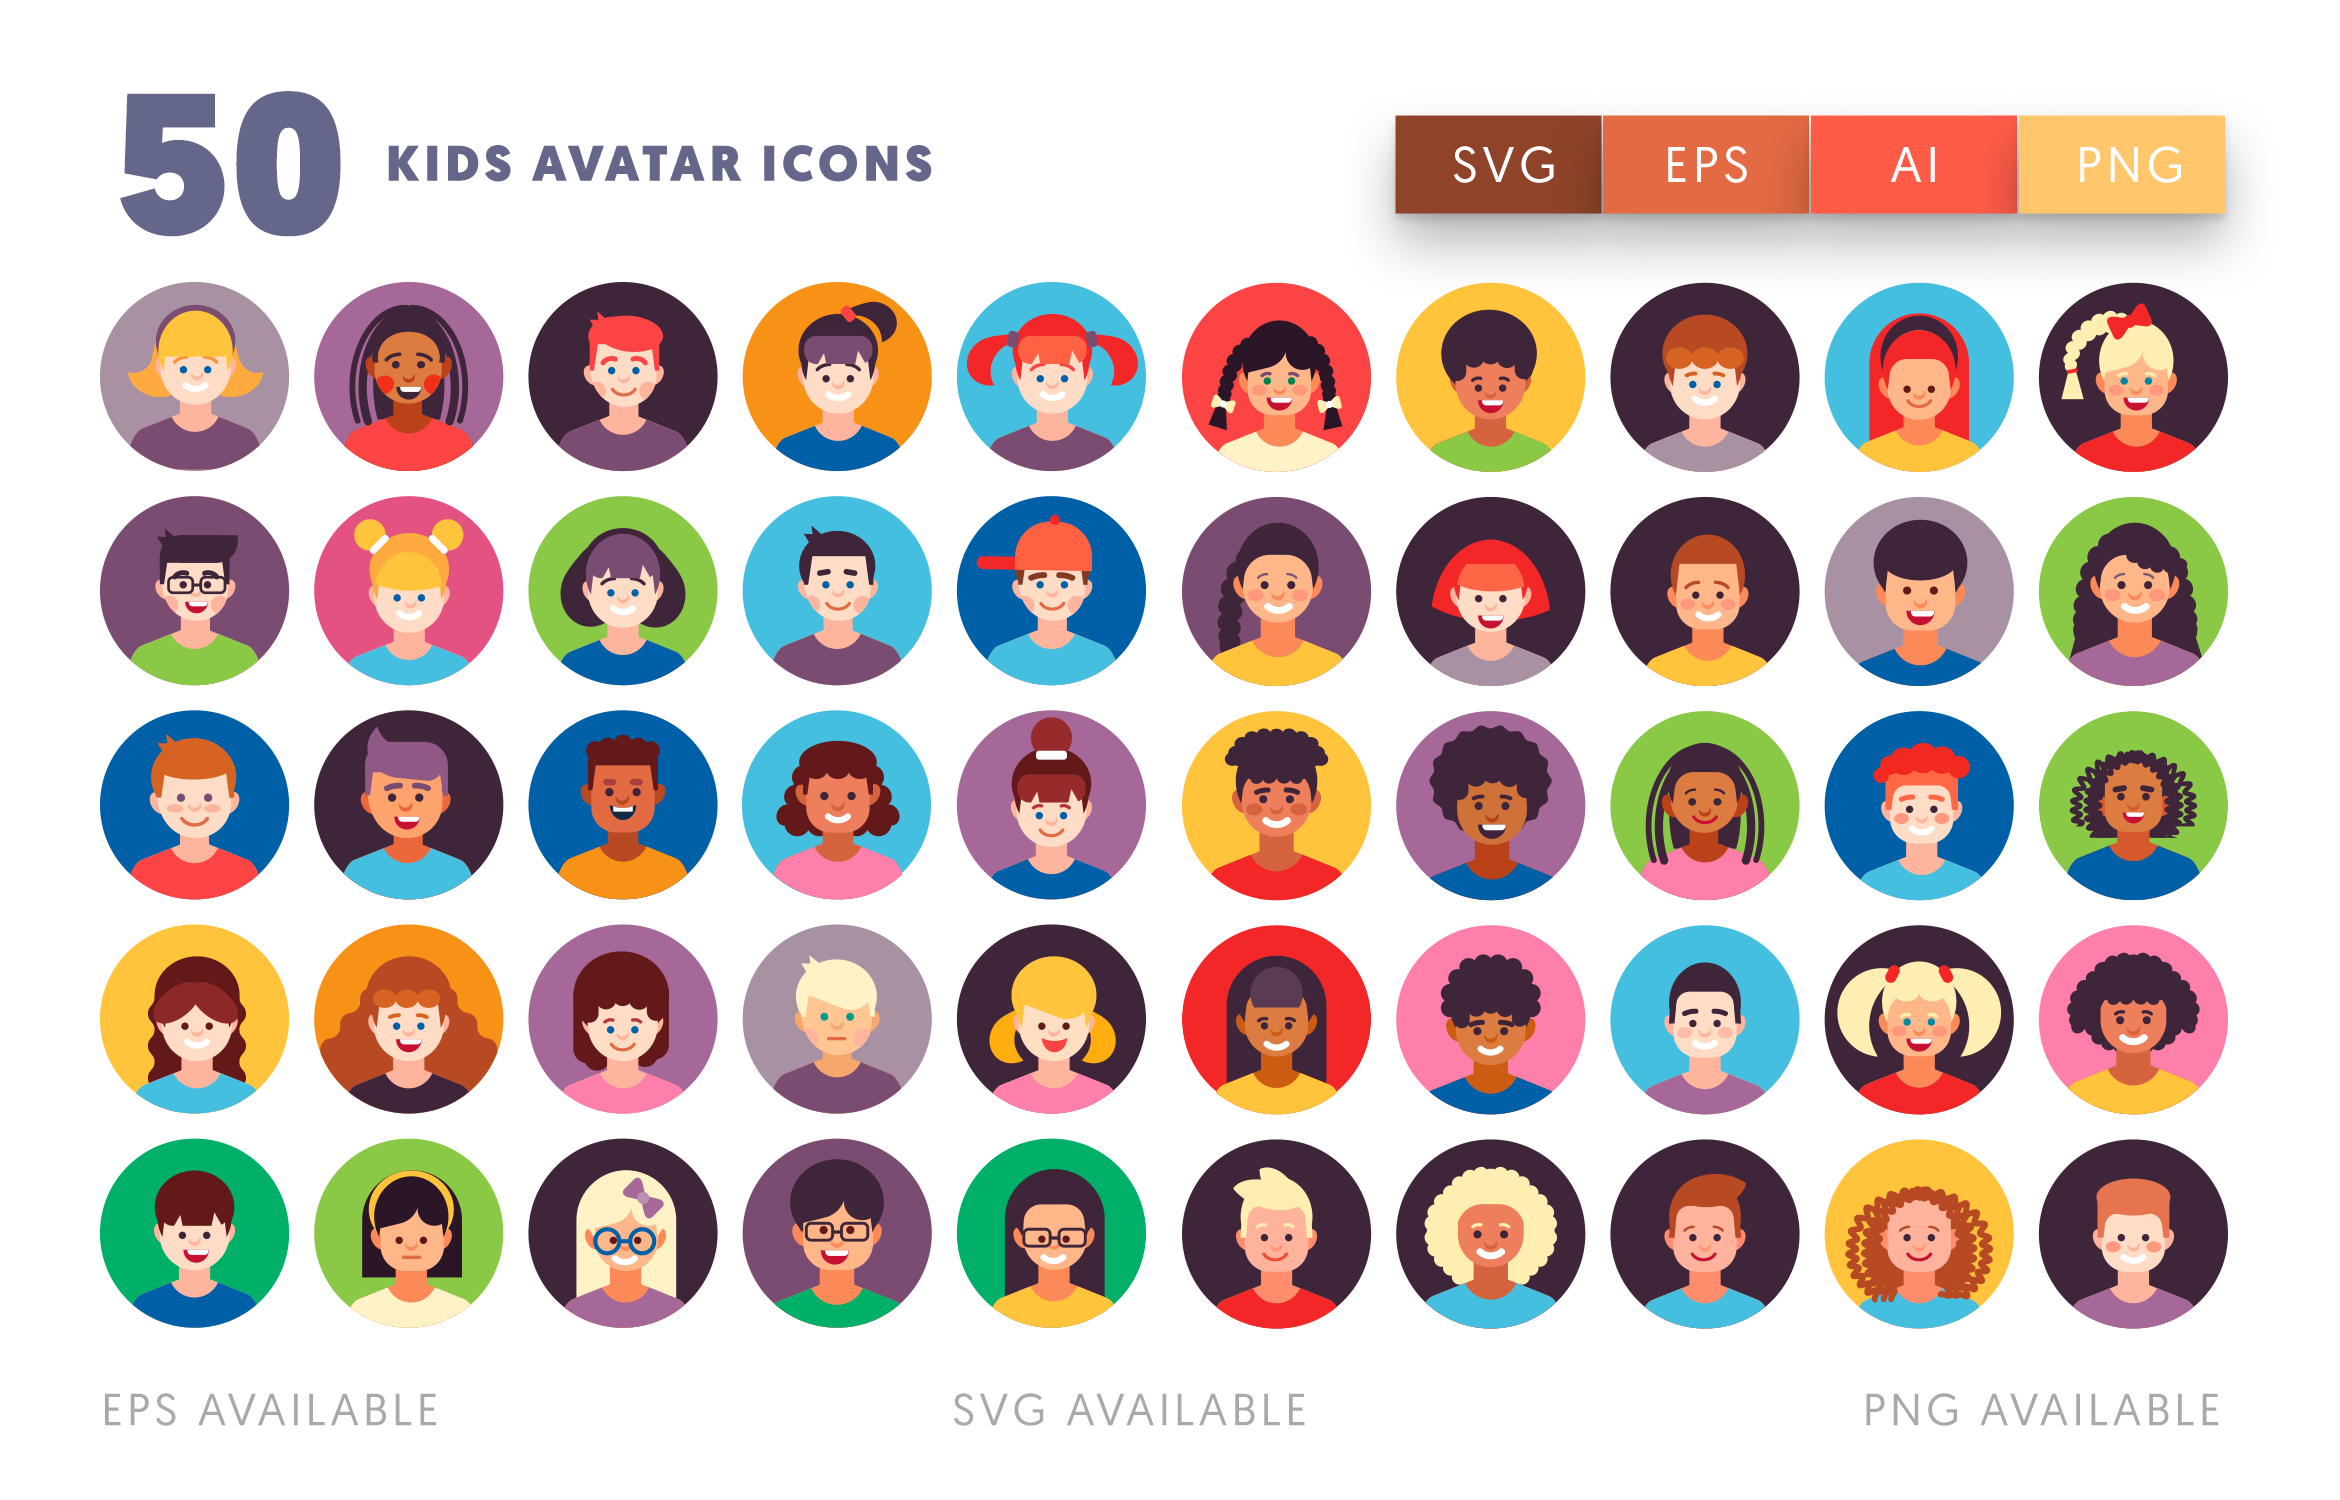 50 Kids Avatar Icons